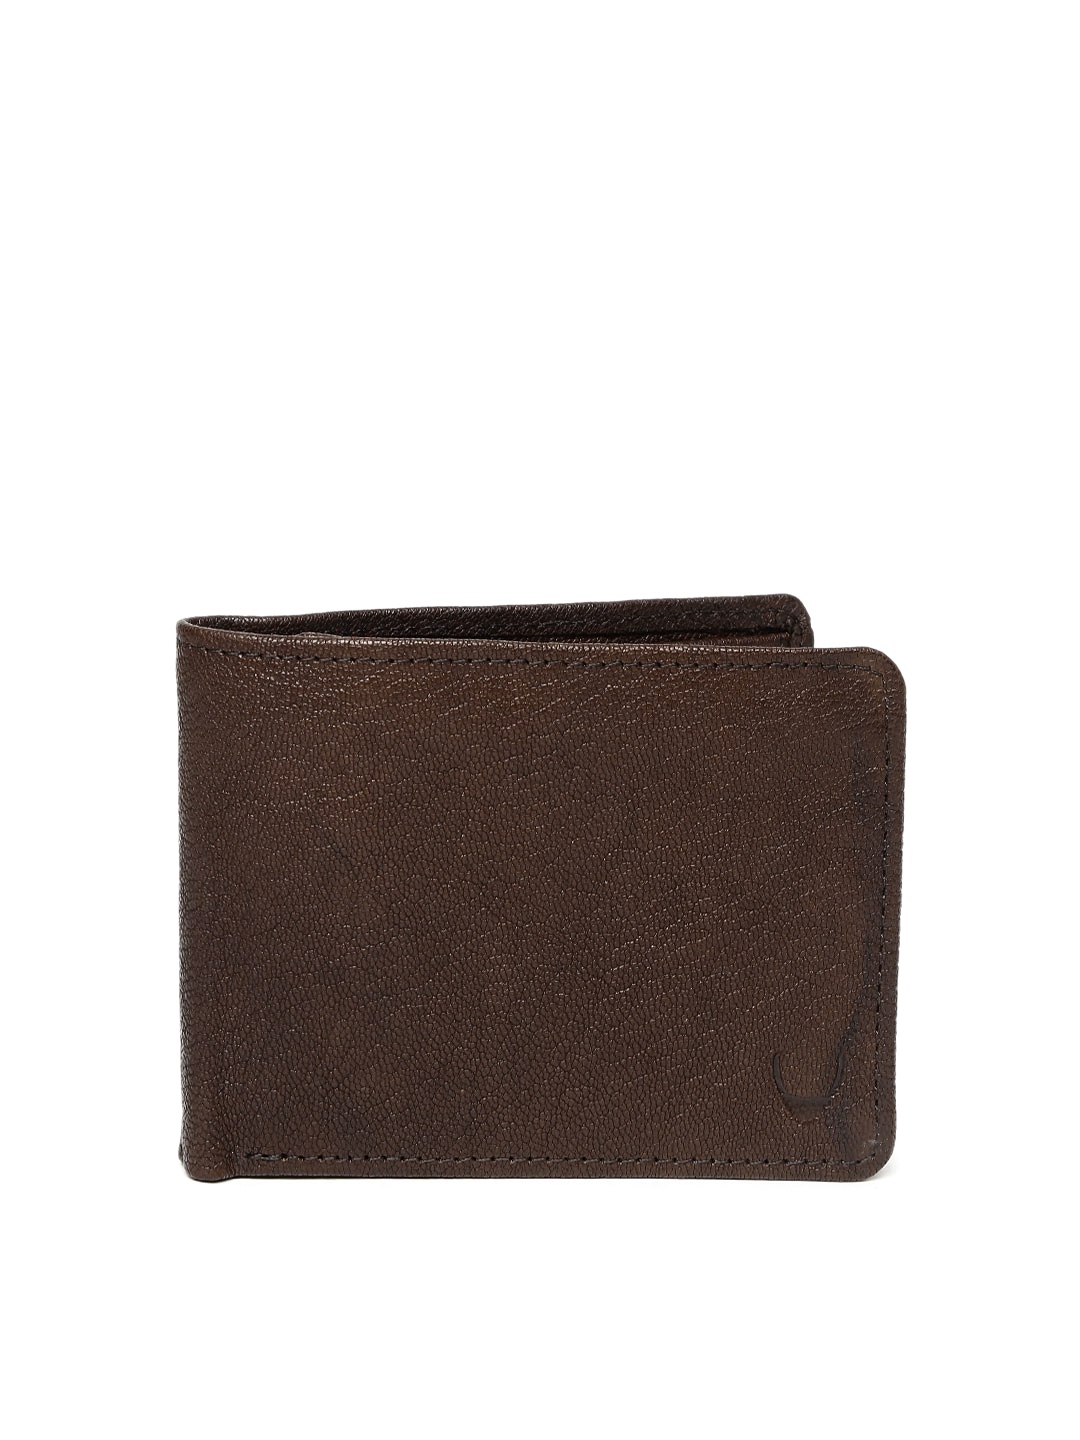 Myntra Hidesign Men Brown Leather Wallet 814999 | Buy Myntra Hidesign Wallets at best price ...